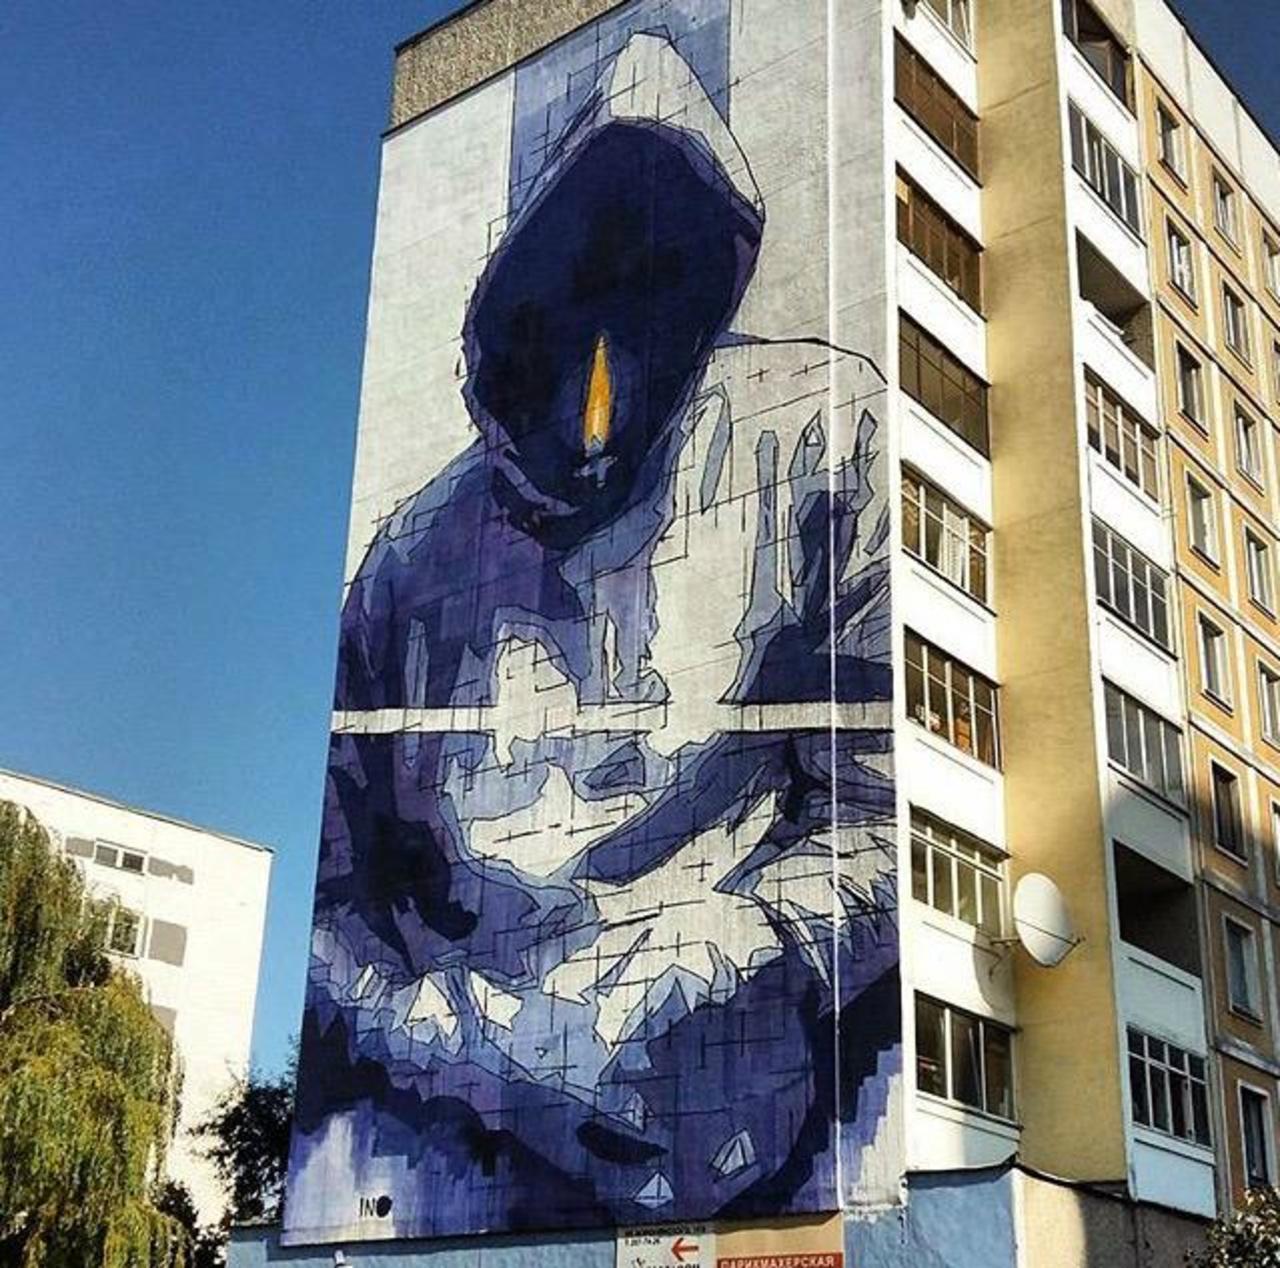 'Man With No Name' 
New Street Art by iNO in Minsk, Belarus 

#art #graffiti #mural #streetart http://t.co/dl4xvENrCk